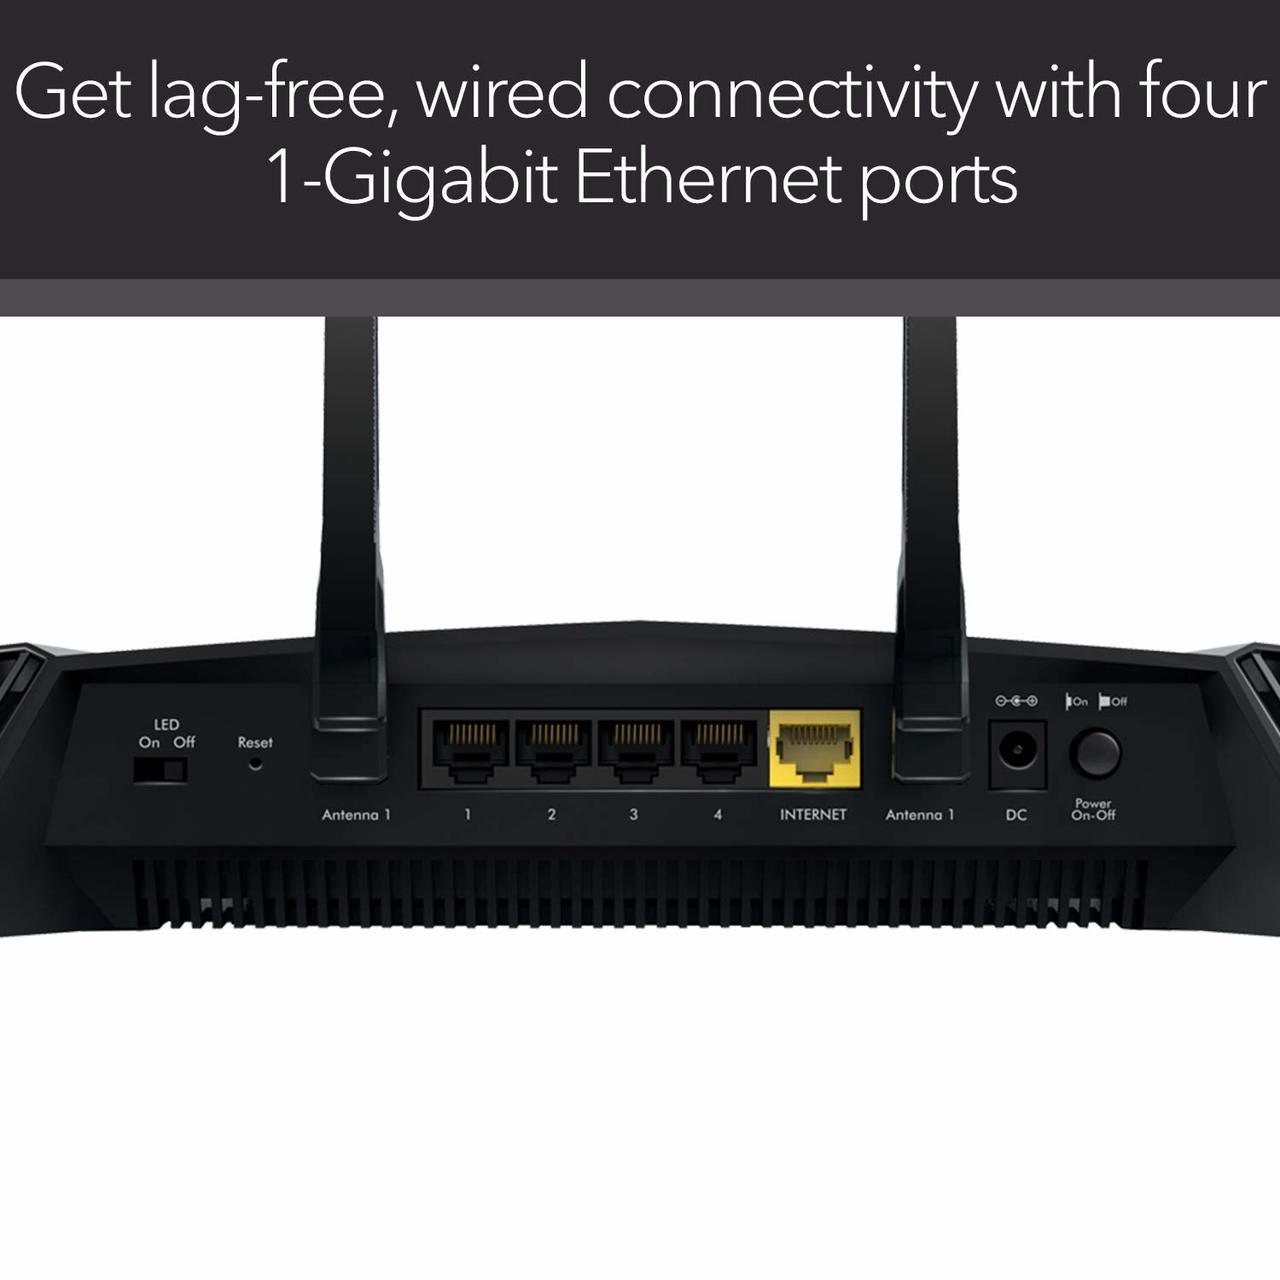 NetGear XR500-100NAR Nighthawk Pro Gaming WiFi Router - Certified Refurbished